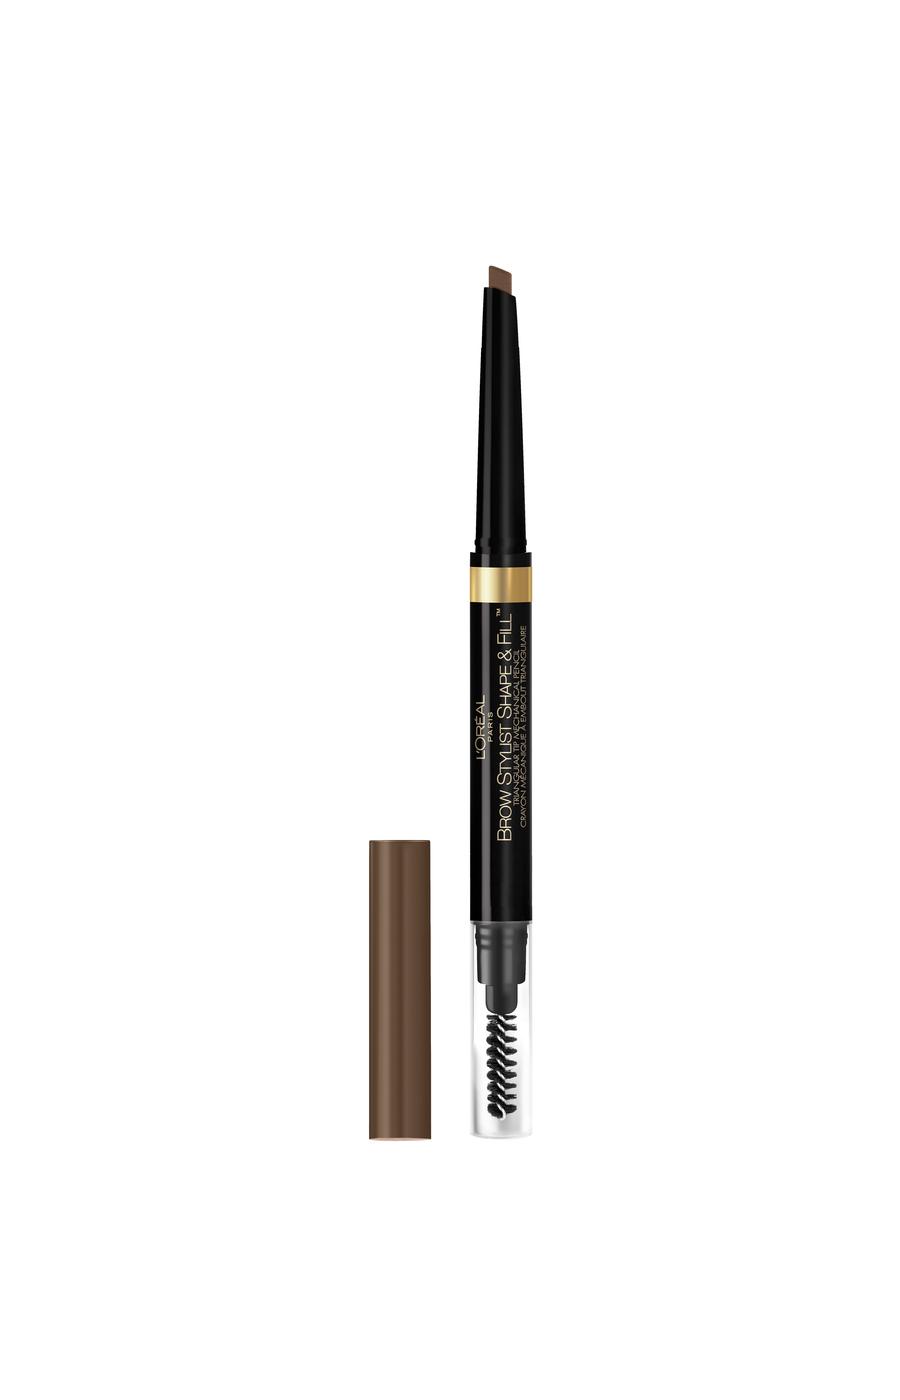 L'Oréal Paris Brow Stylist Shape and Fill Mechanical Eye Brow Makeup Pencil Brunette; image 2 of 3